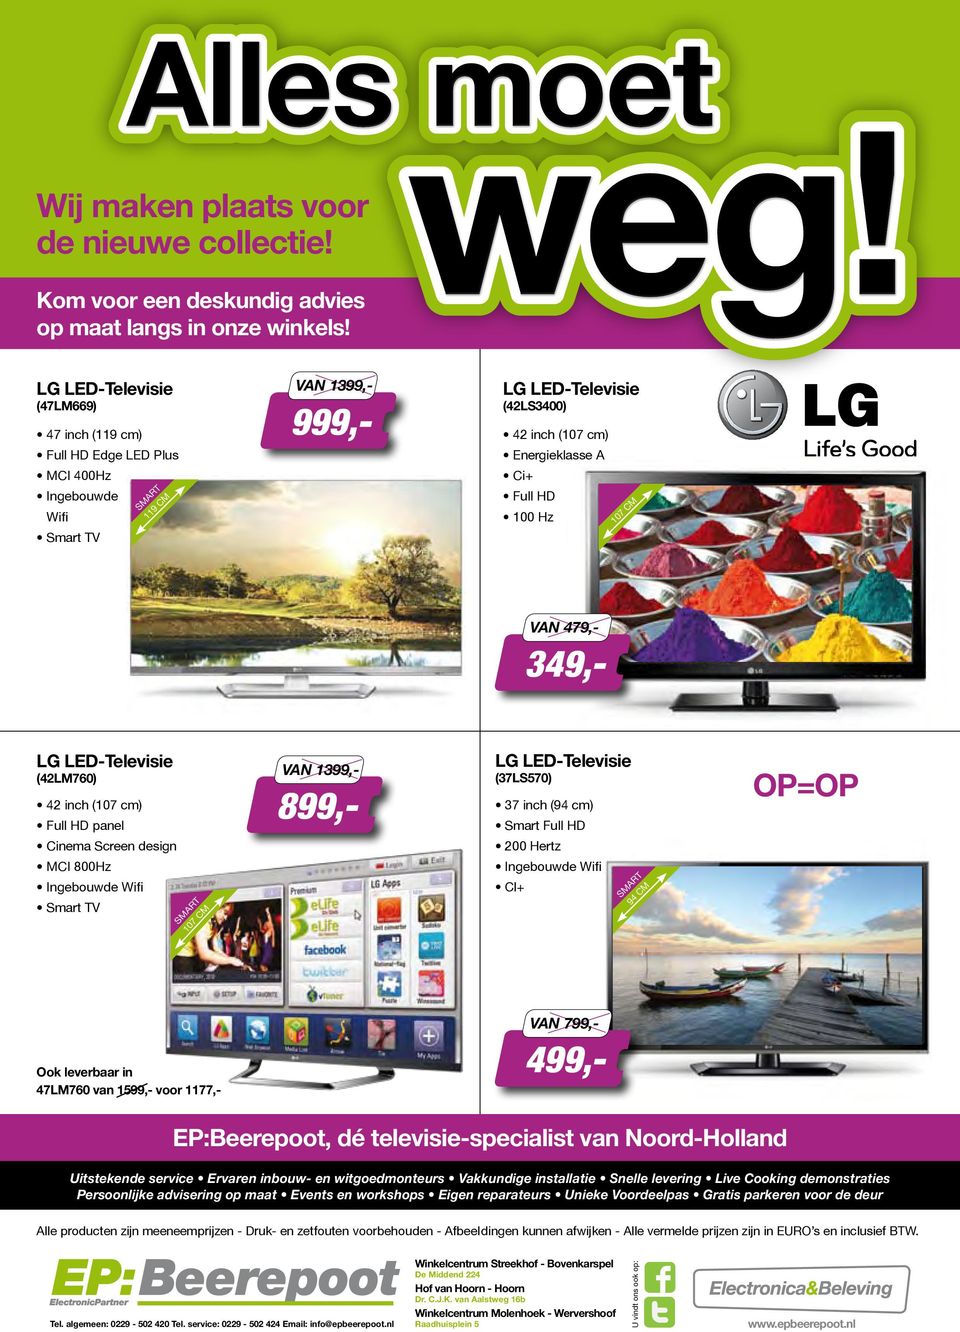 LG led-televisie (42LM760) 42 inch (107 cm) Full HD panel Cinema Screen design MCI 800Hz Ingebouwde Wifi 107 cm VAN 1399,- 899,- LG led-televisie (37LS570) 37 inch (94 cm) Smart Full HD 200 Hertz